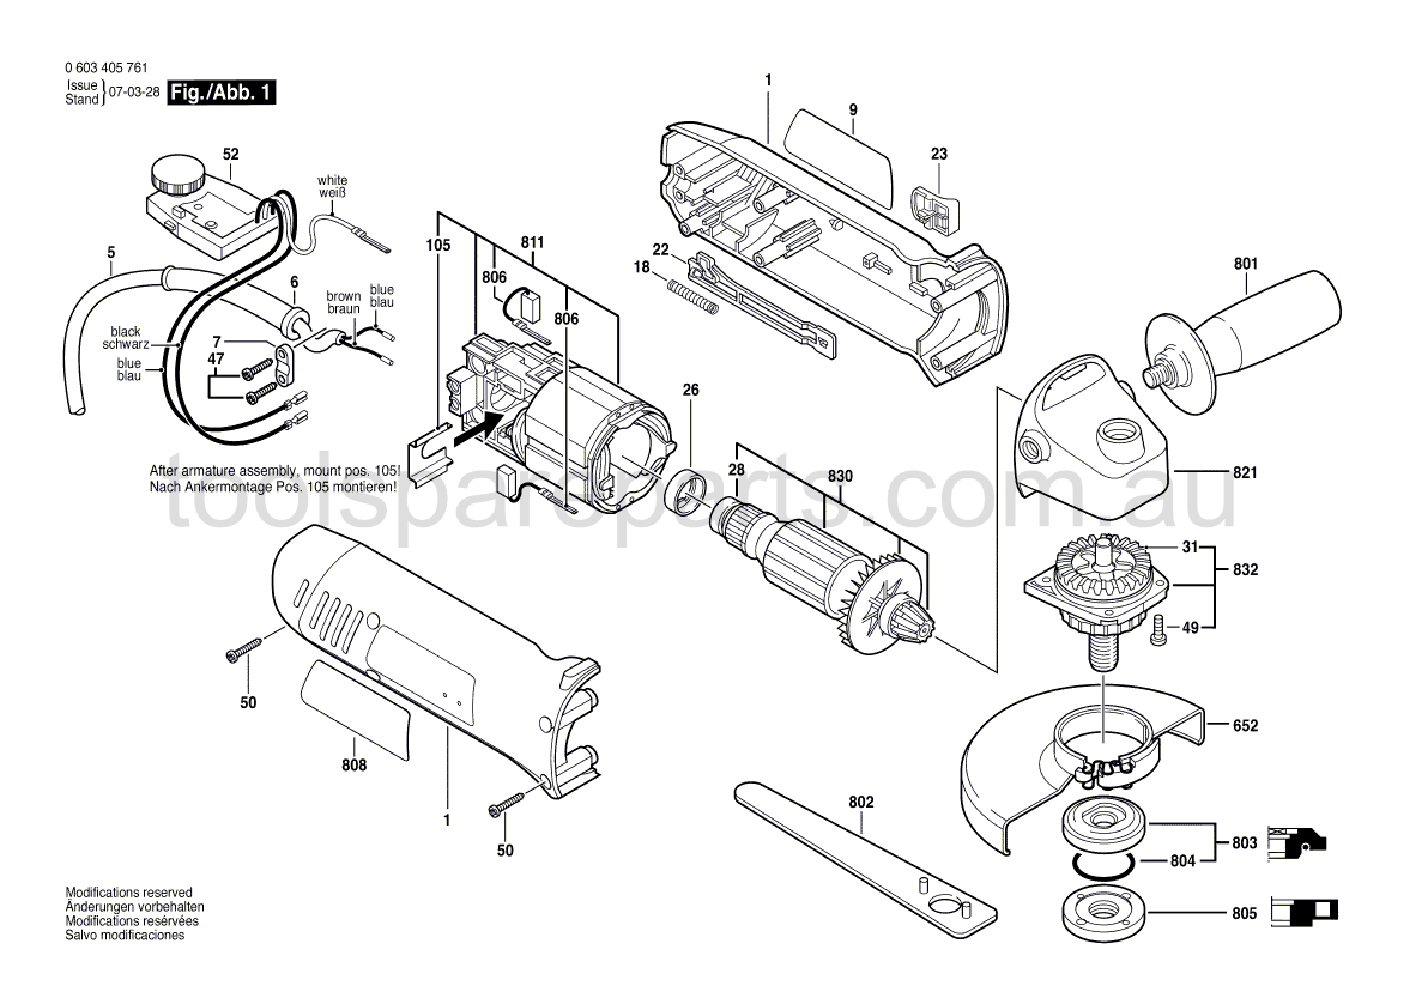 Bosch PWS 850 CE 0603405761  Diagram 1